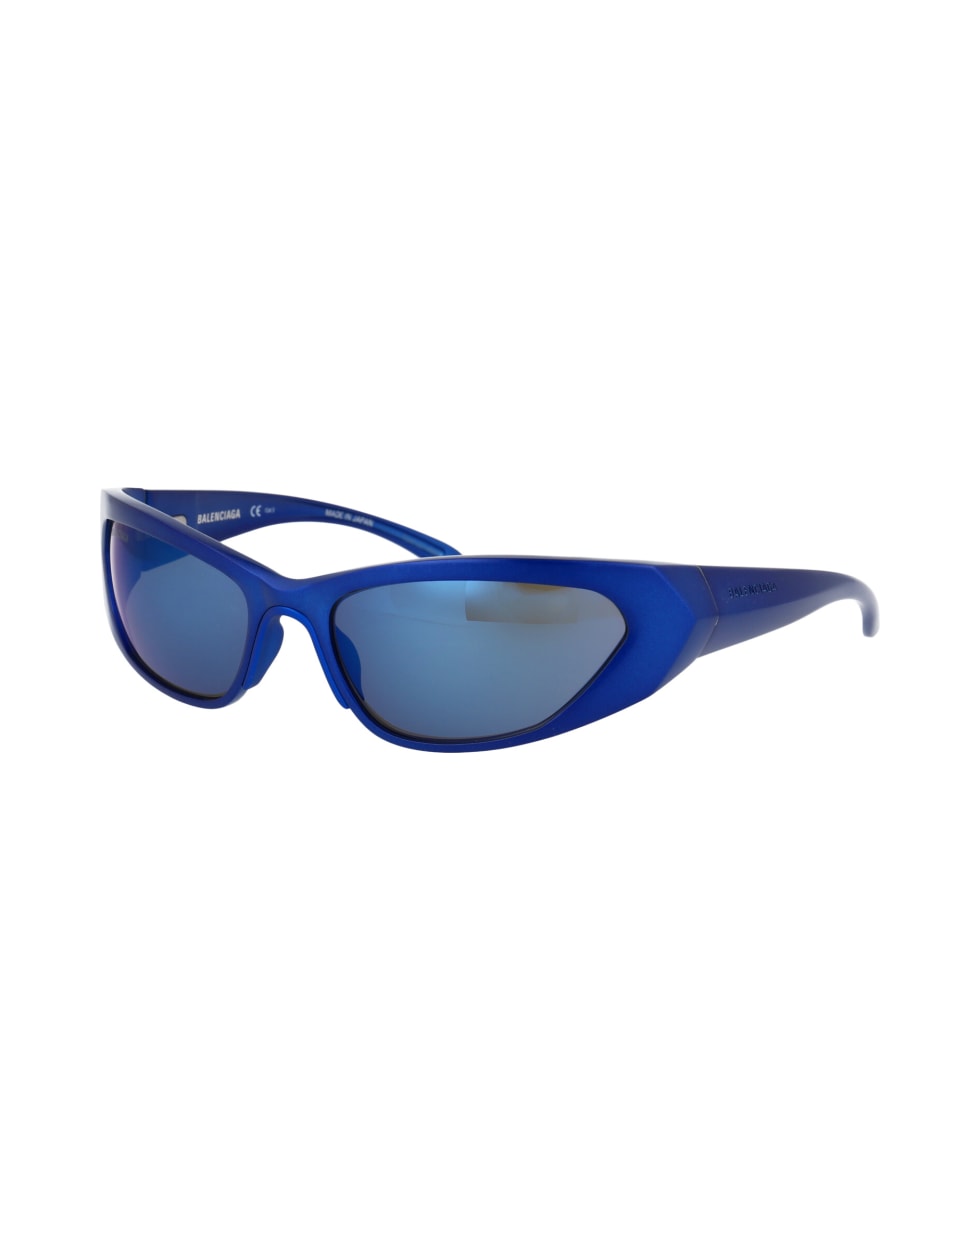 Balenciaga Eyewear Bb0181s Sunglasses - 003 BLUE BLUE BLUE